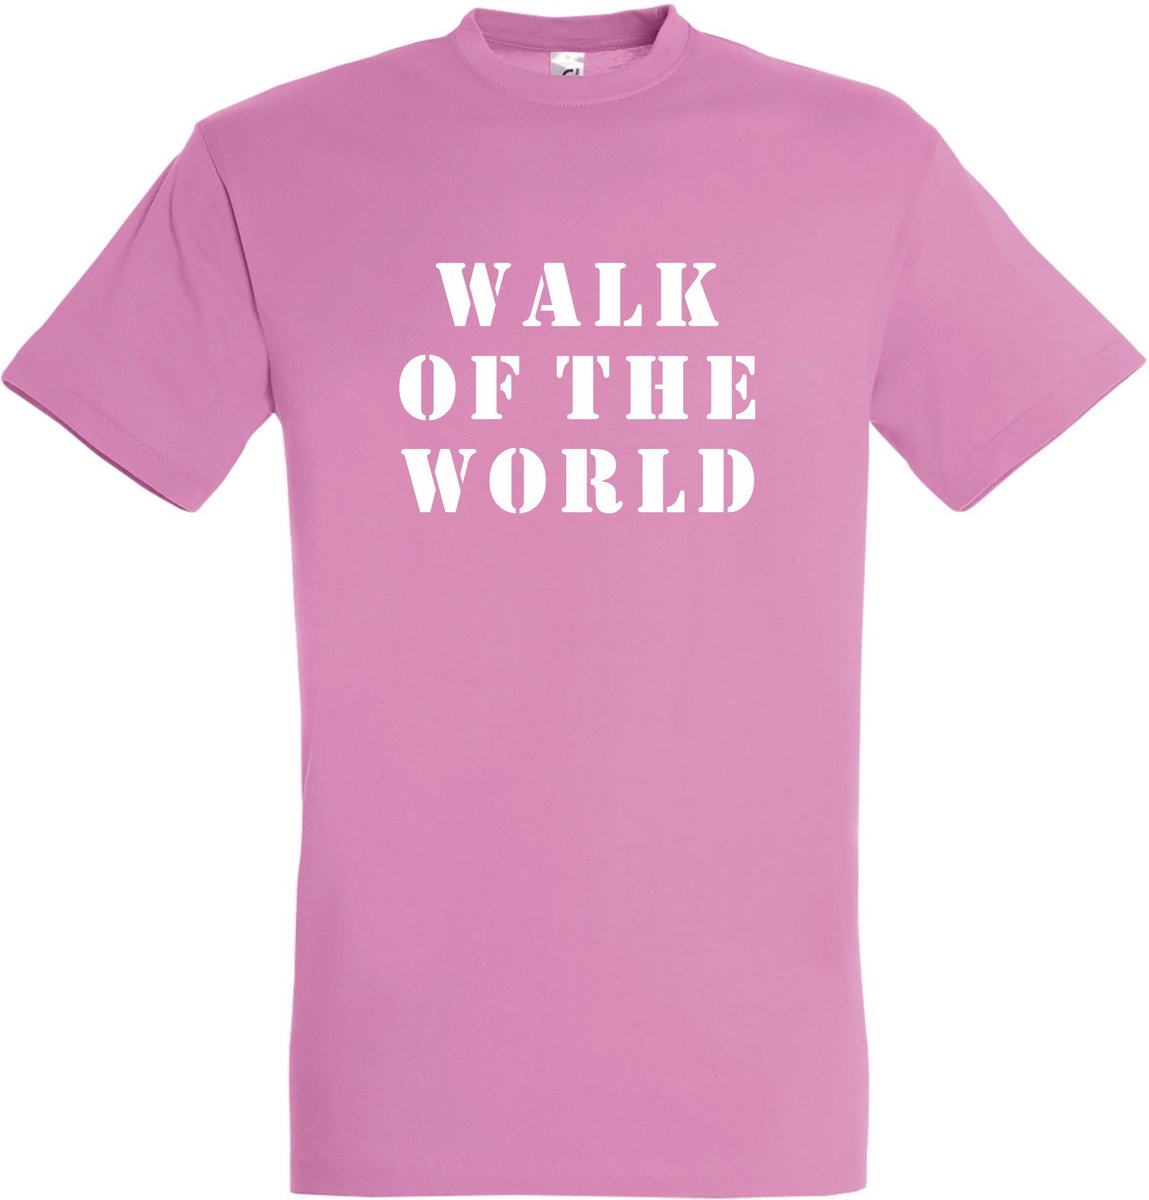 T-shirt Walk of the world |Wandelvierdaagse | vierdaagse Nijmegen | Roze woensdag | Roze | maat M